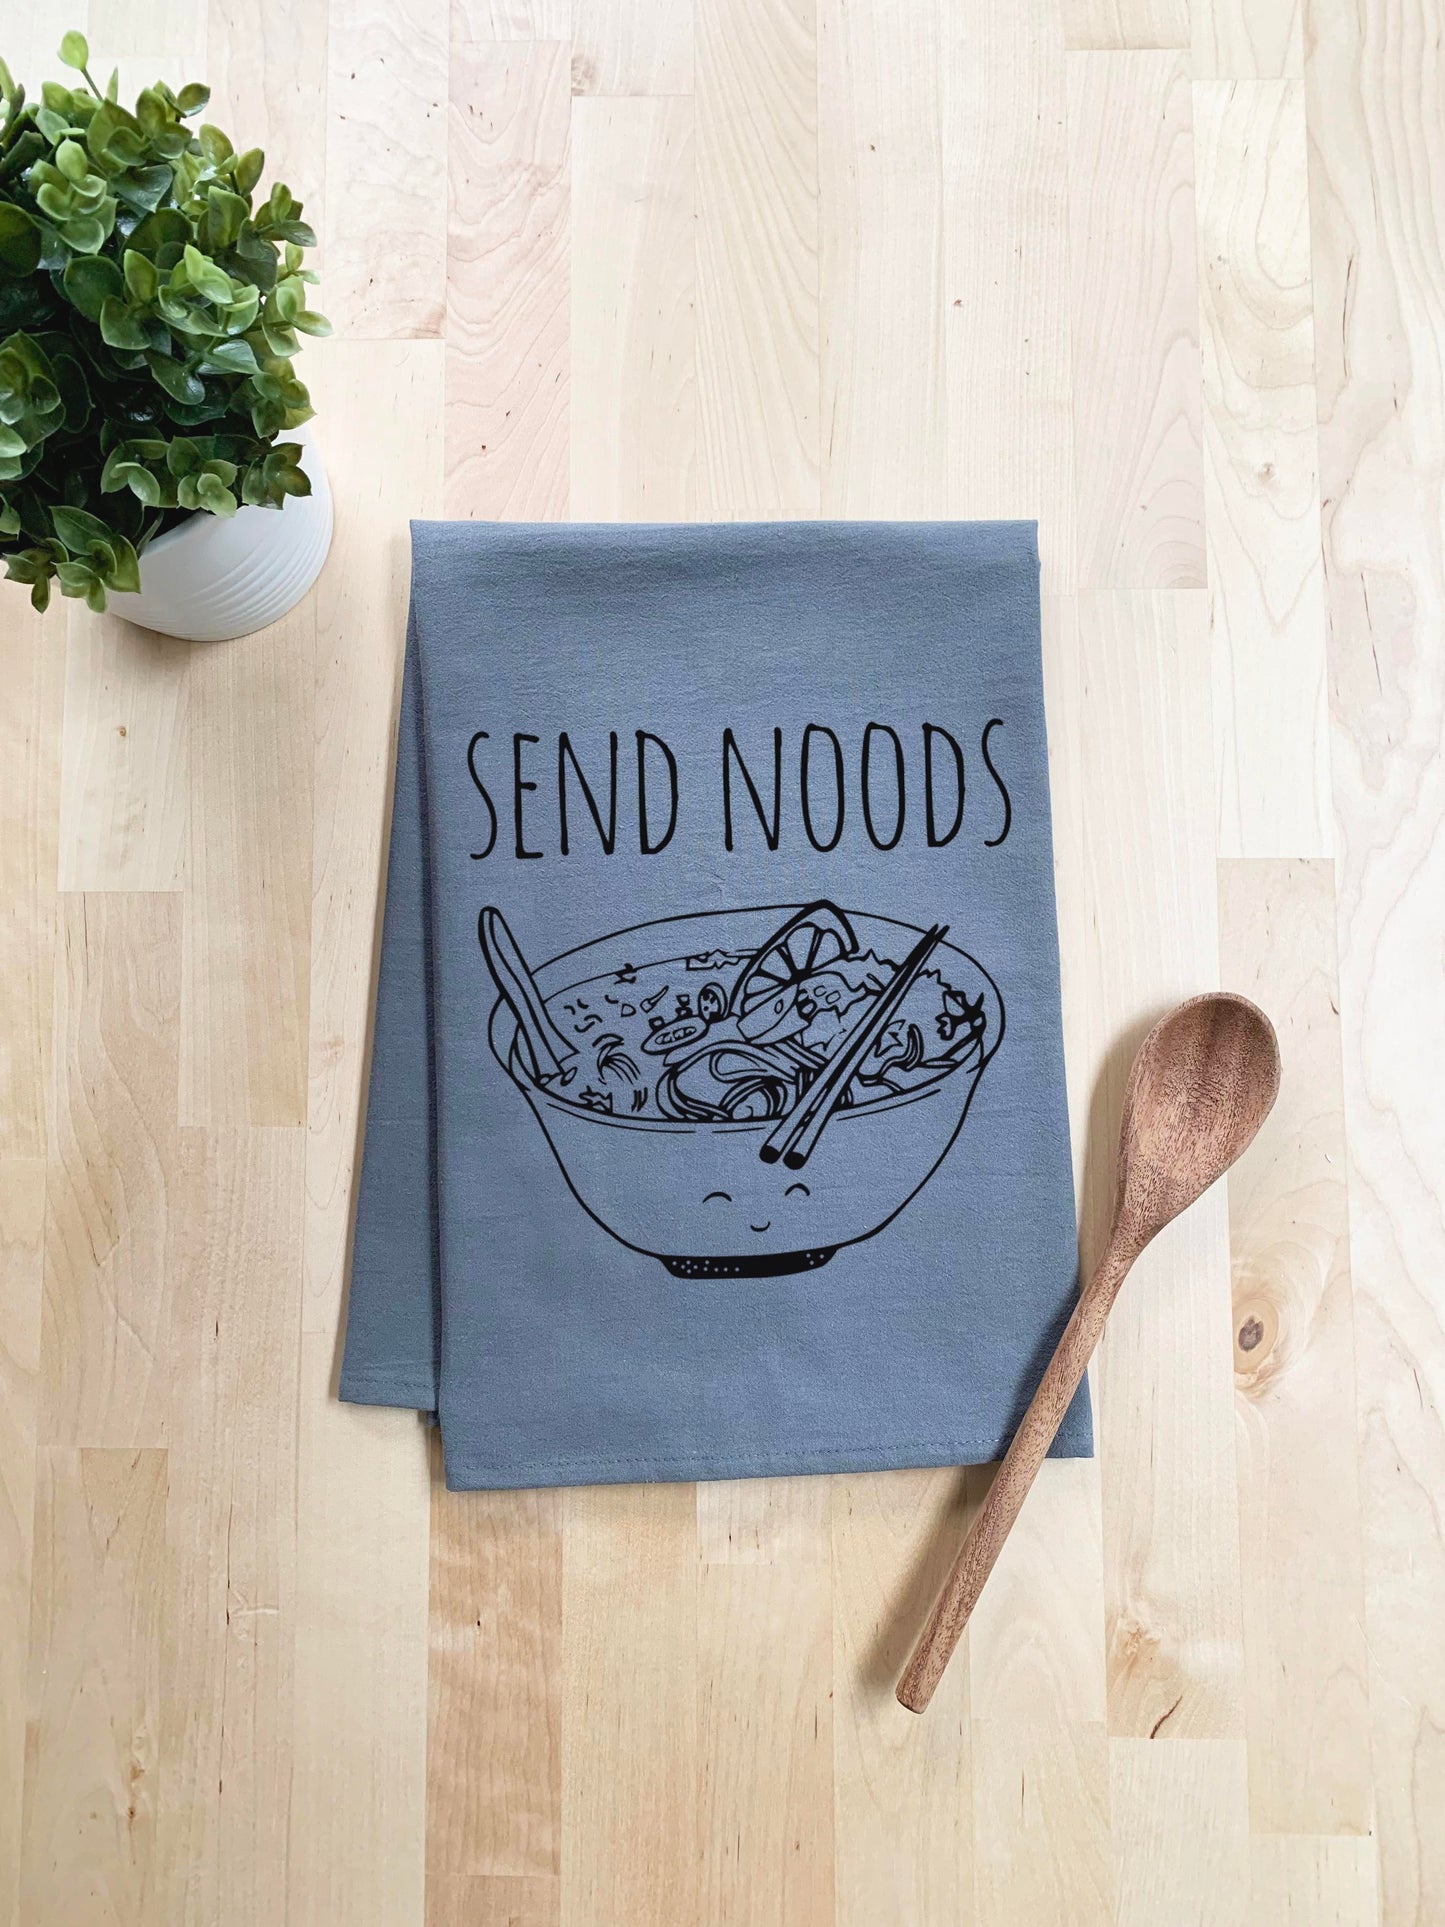 Send Noods Dish Towel - White Or Gray - MoonlightMakers